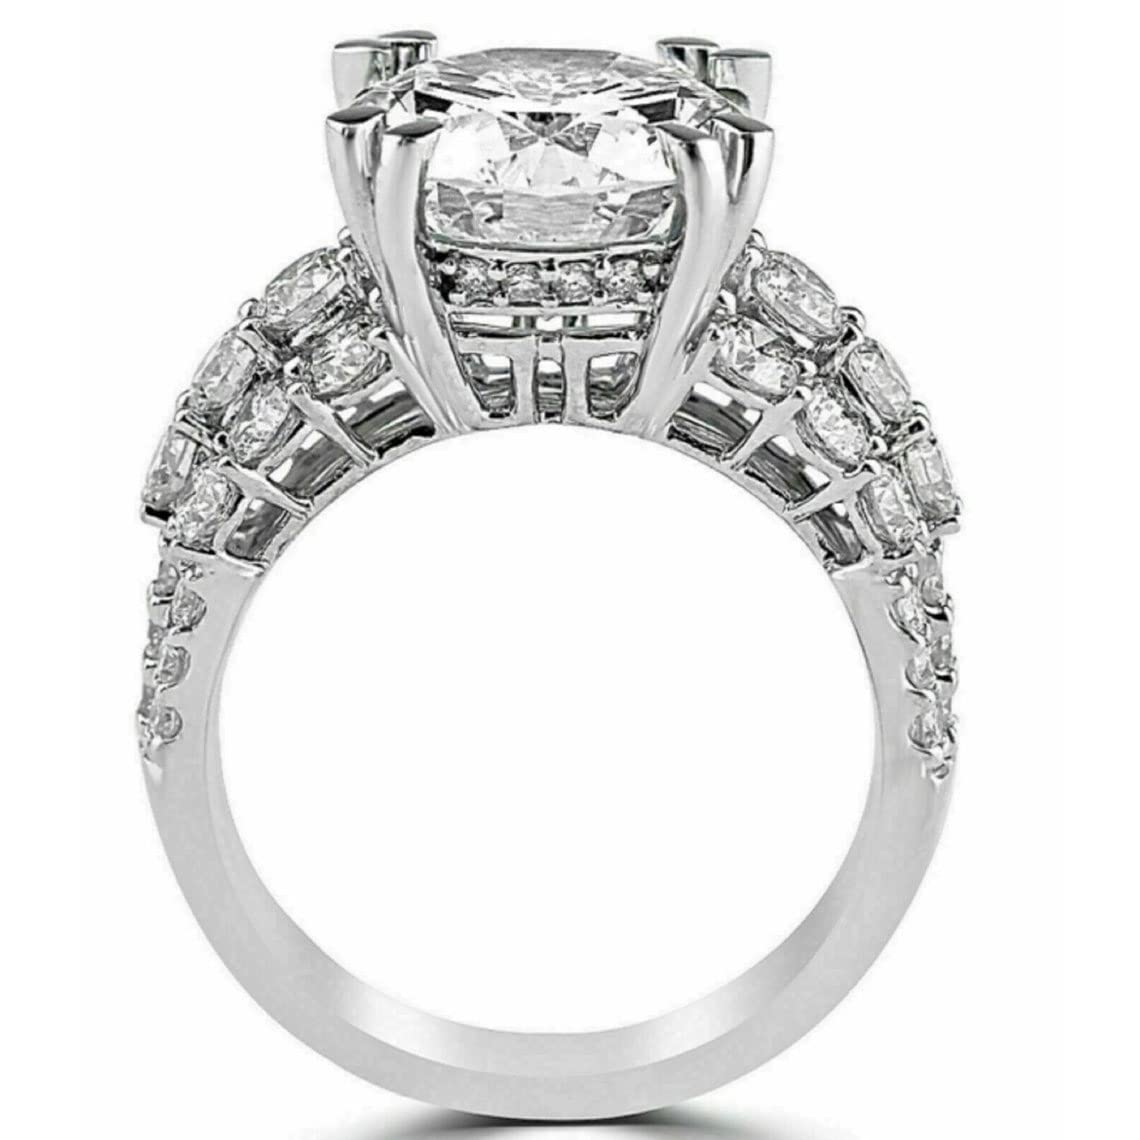 DESTINY JEWEL 3.22CT Round Cut Diamond D/VVS1 Engagement Wedding Ring, Solid 925 Silver Ring